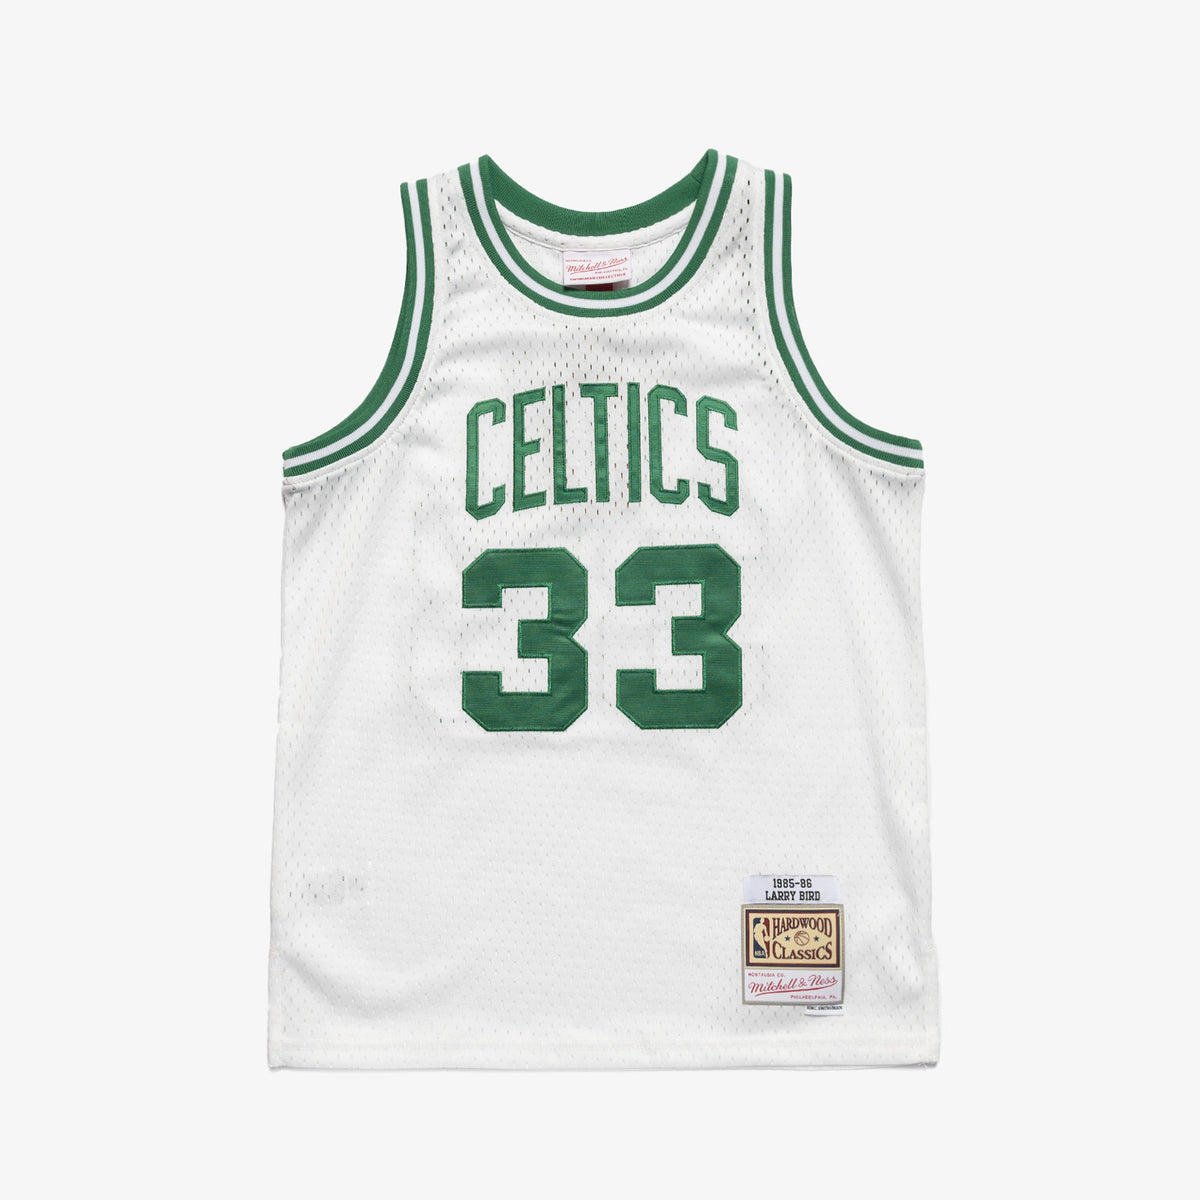 Larry Bird Boston Celtics 85-86 HWC Youth Swingman Jersey - White